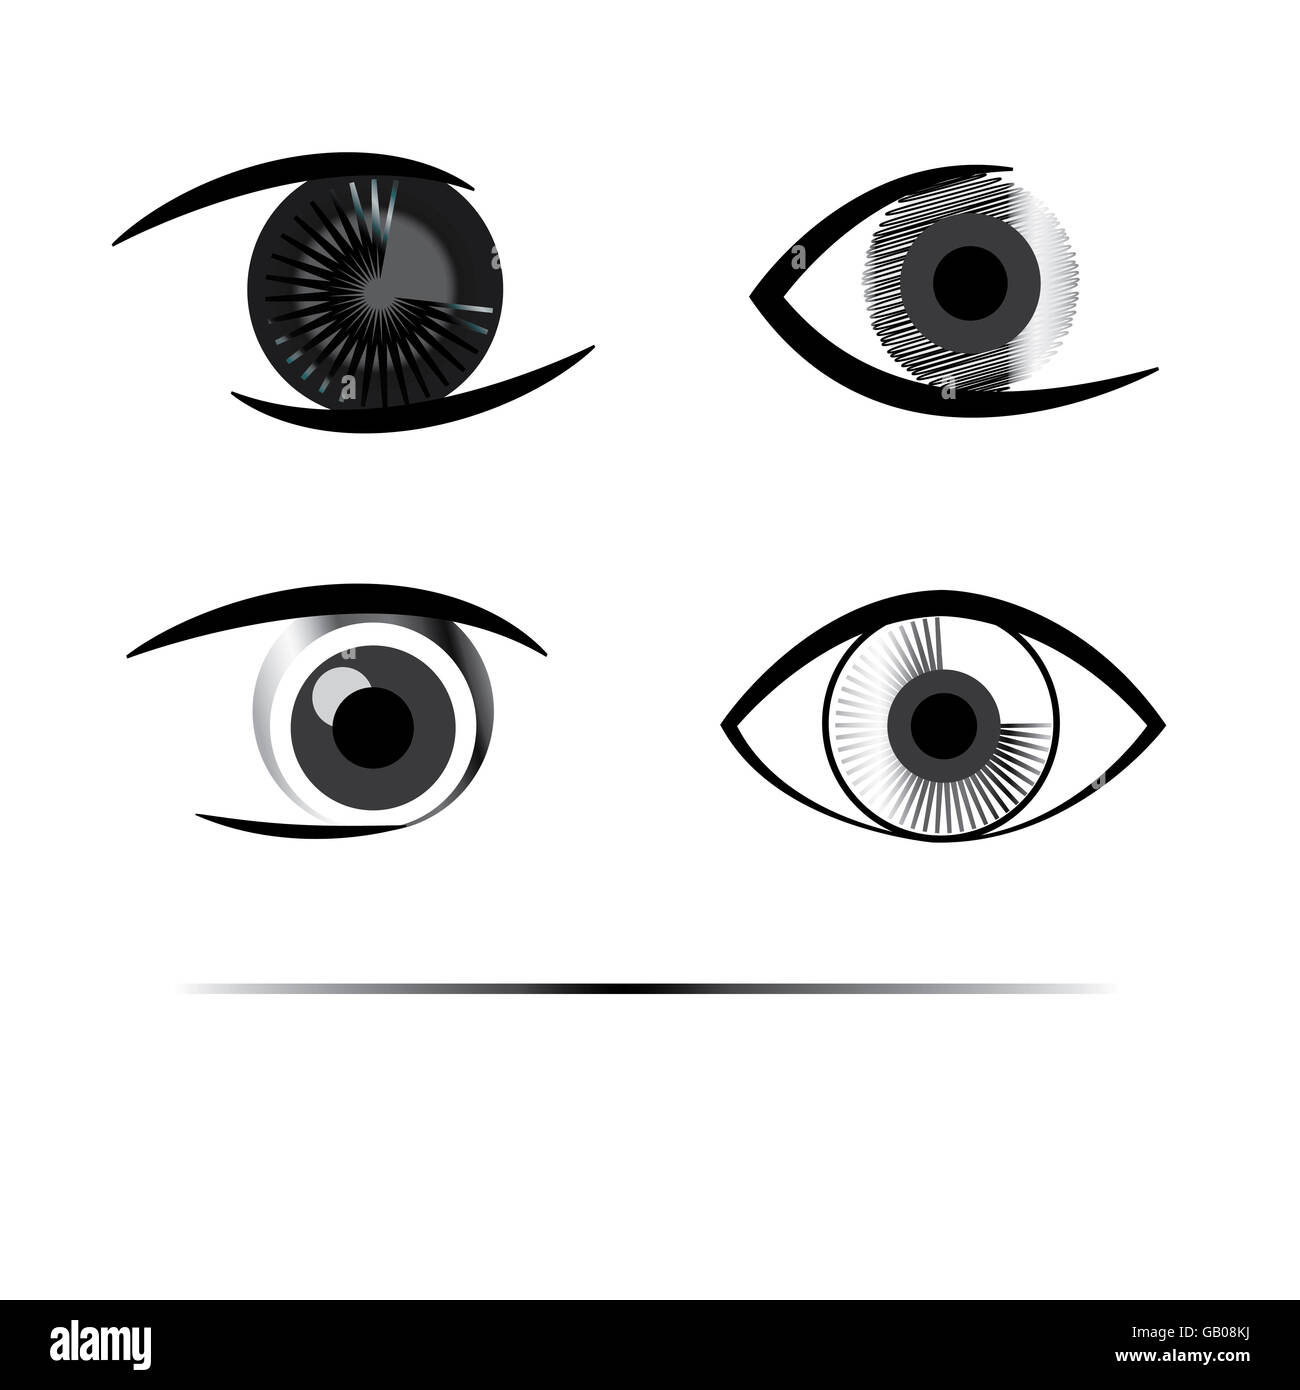 Creative human eyes grayscale Stock Photo